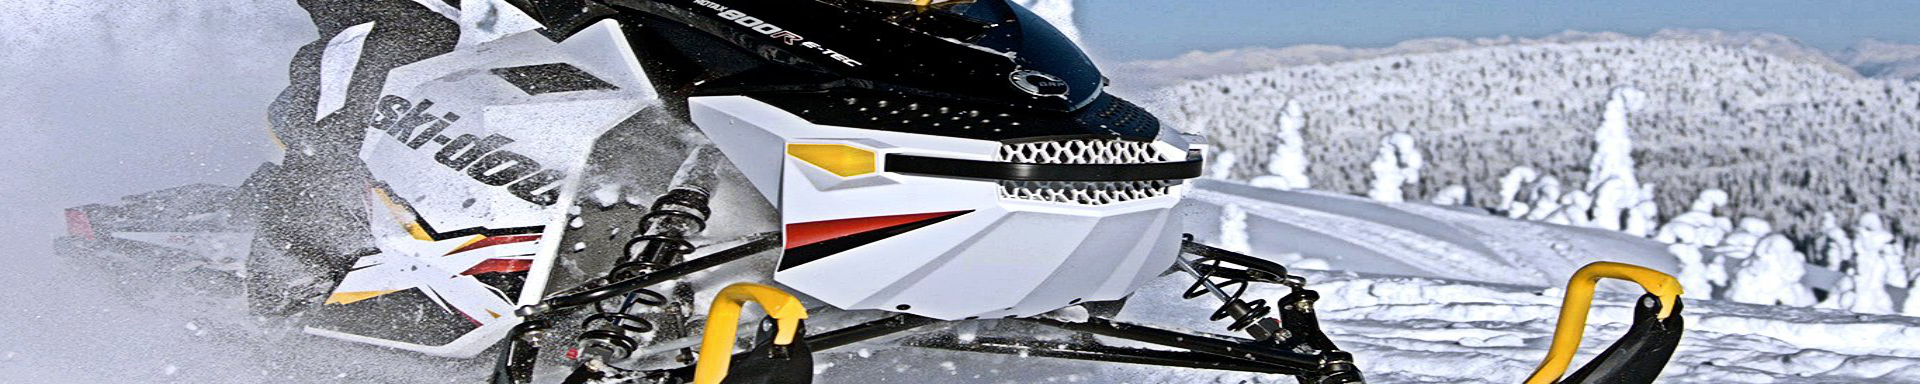 Snowmobile | MunroPowersports.com | Munro Industries mp-10080203